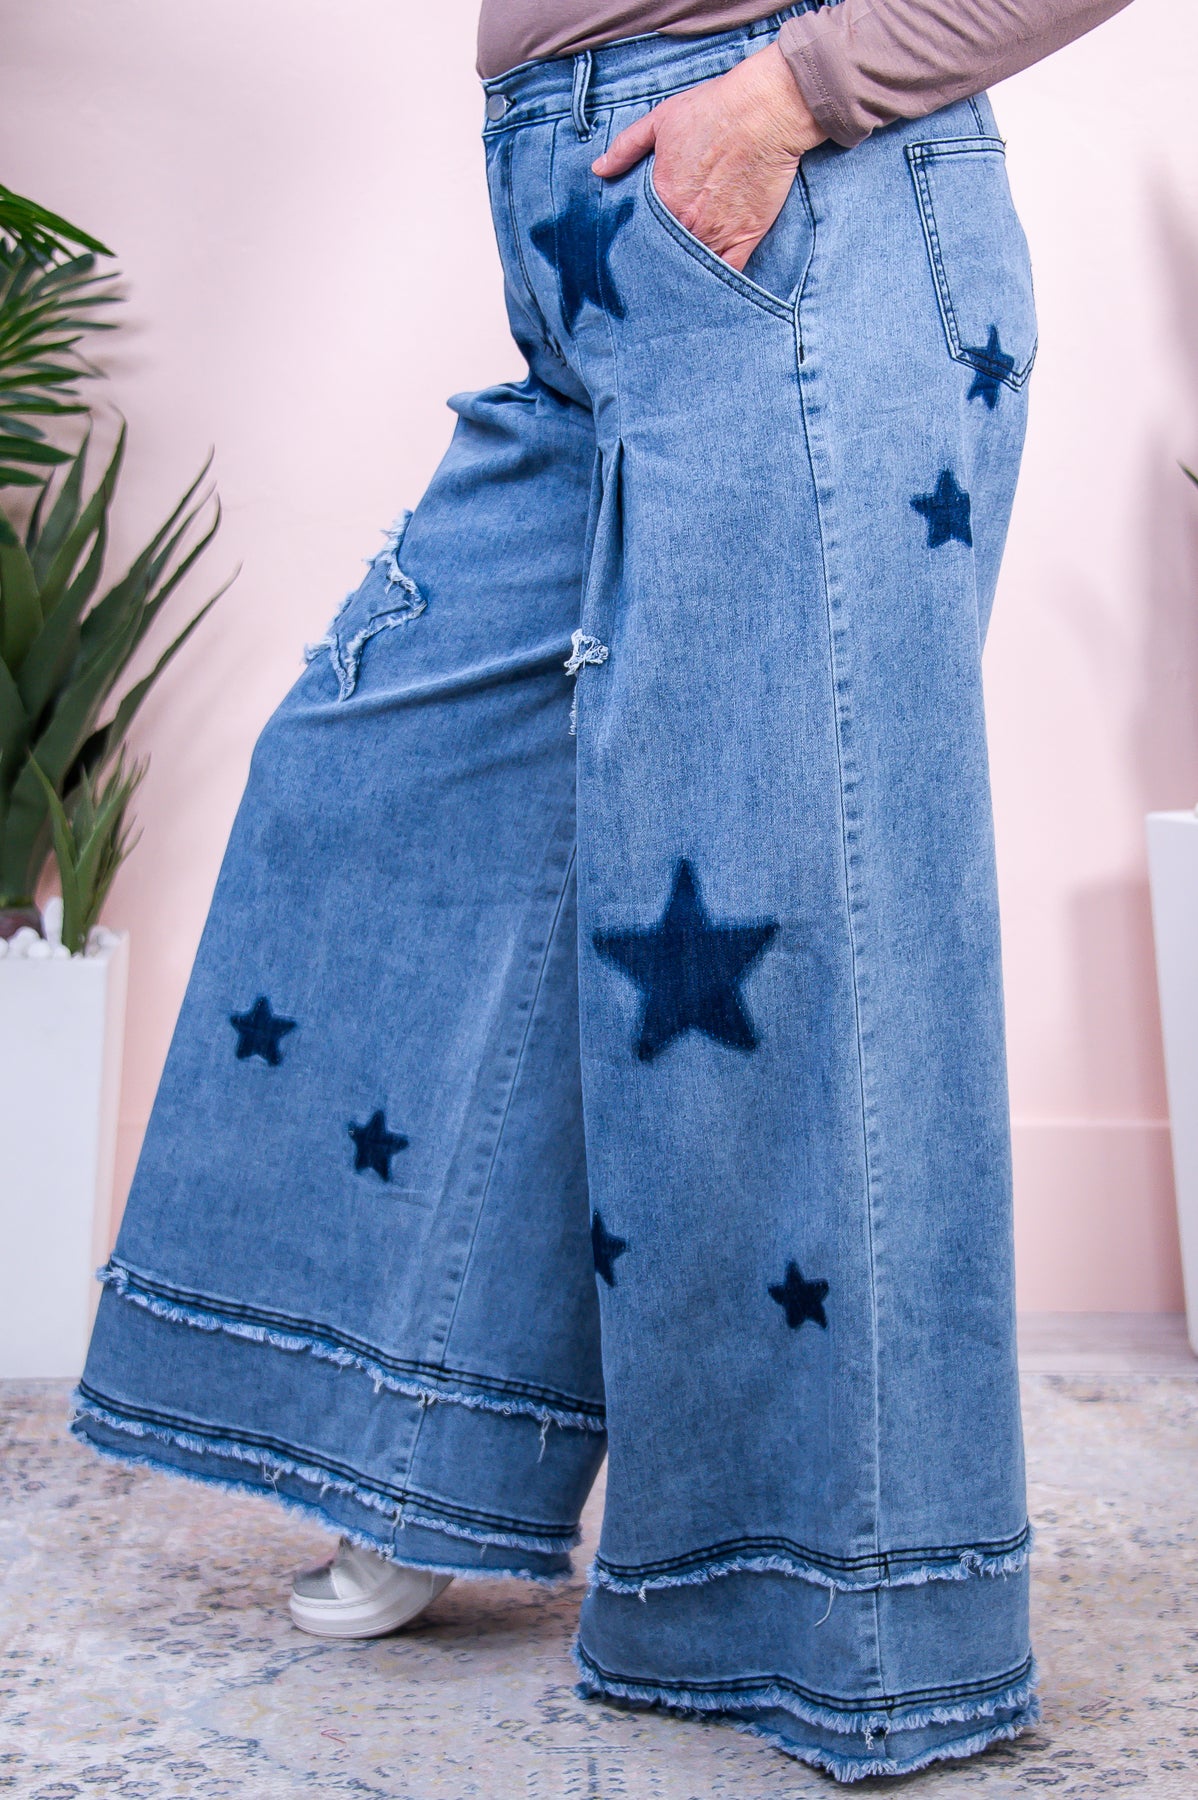 Stacy Light Denim/Dark Denim Star Jeans - K1090DN